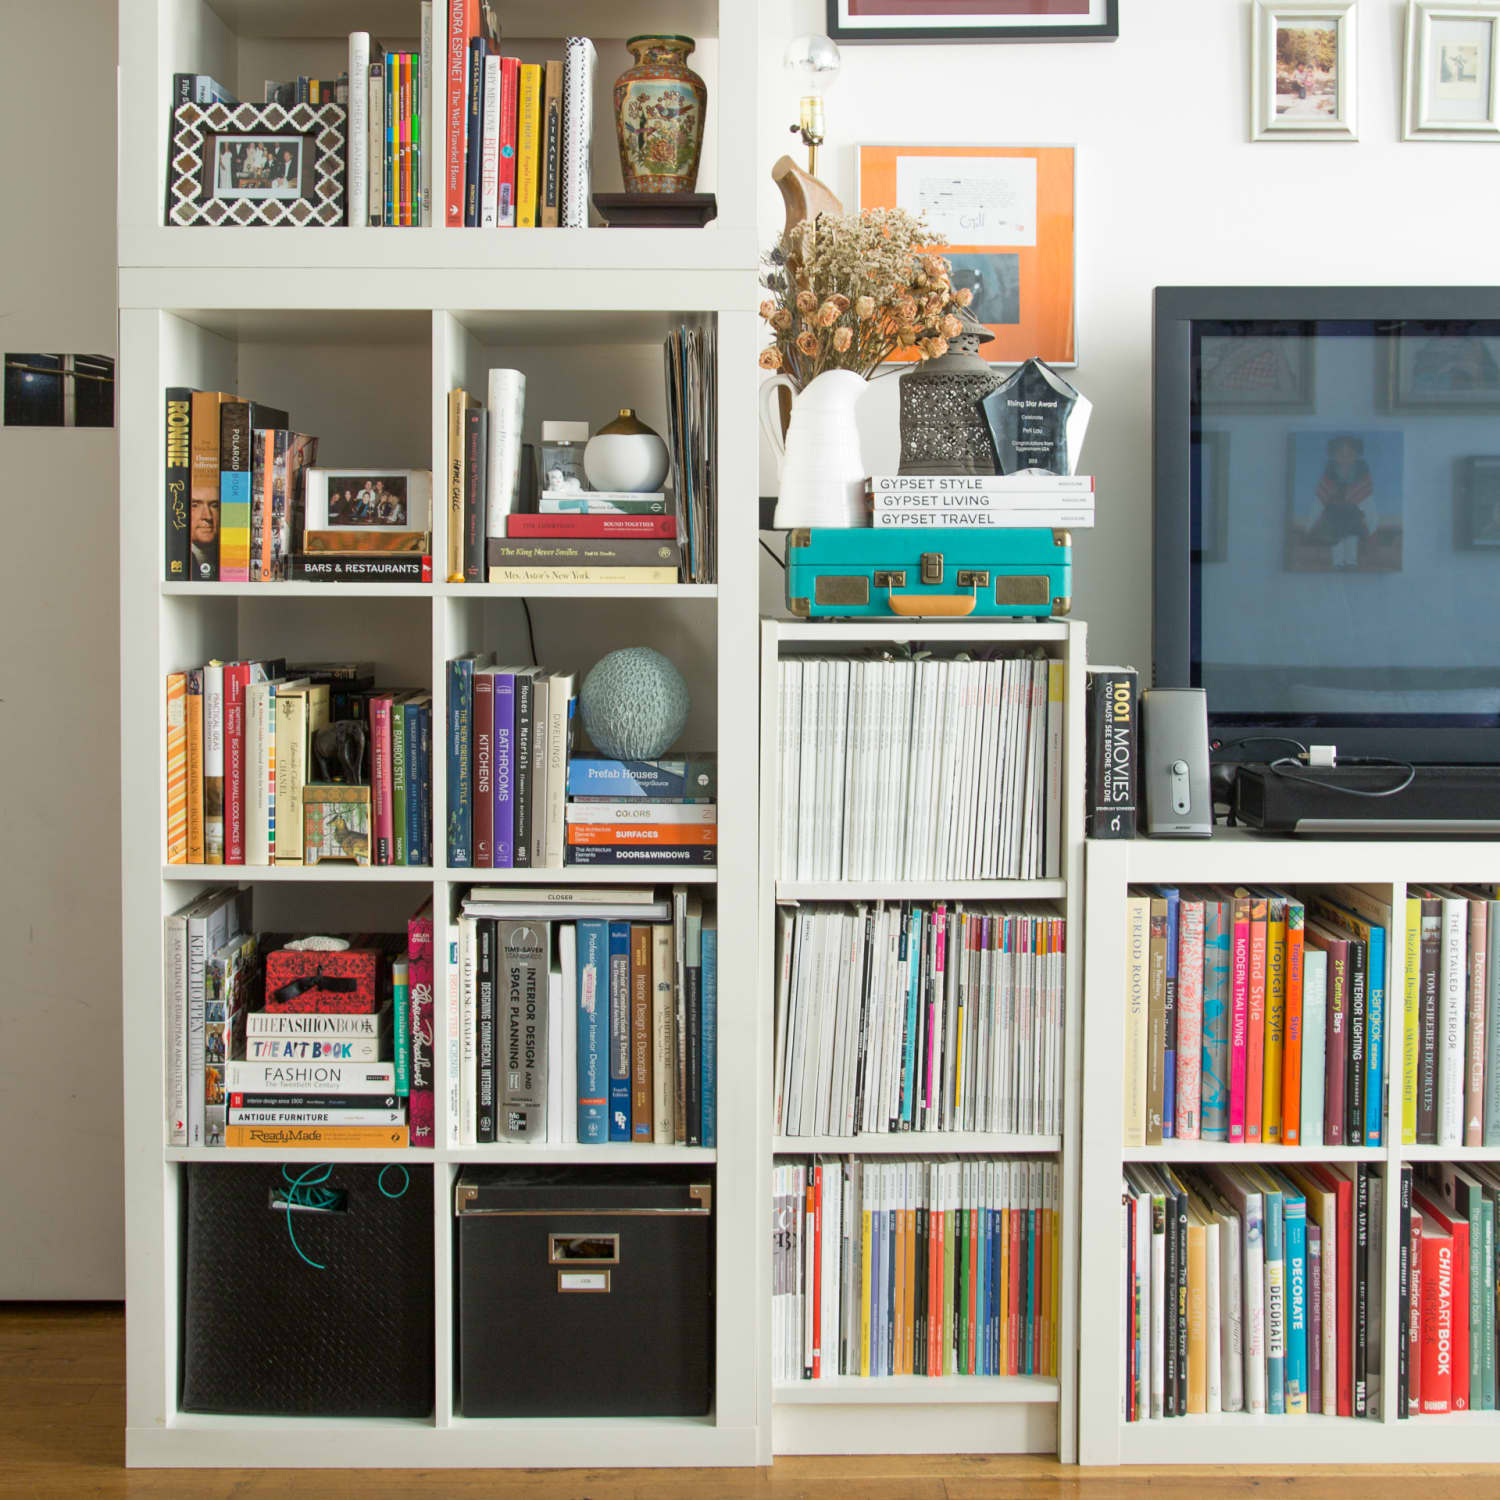 Where To Buy Storage Cubes For An Ikea Kallax Bookshelf